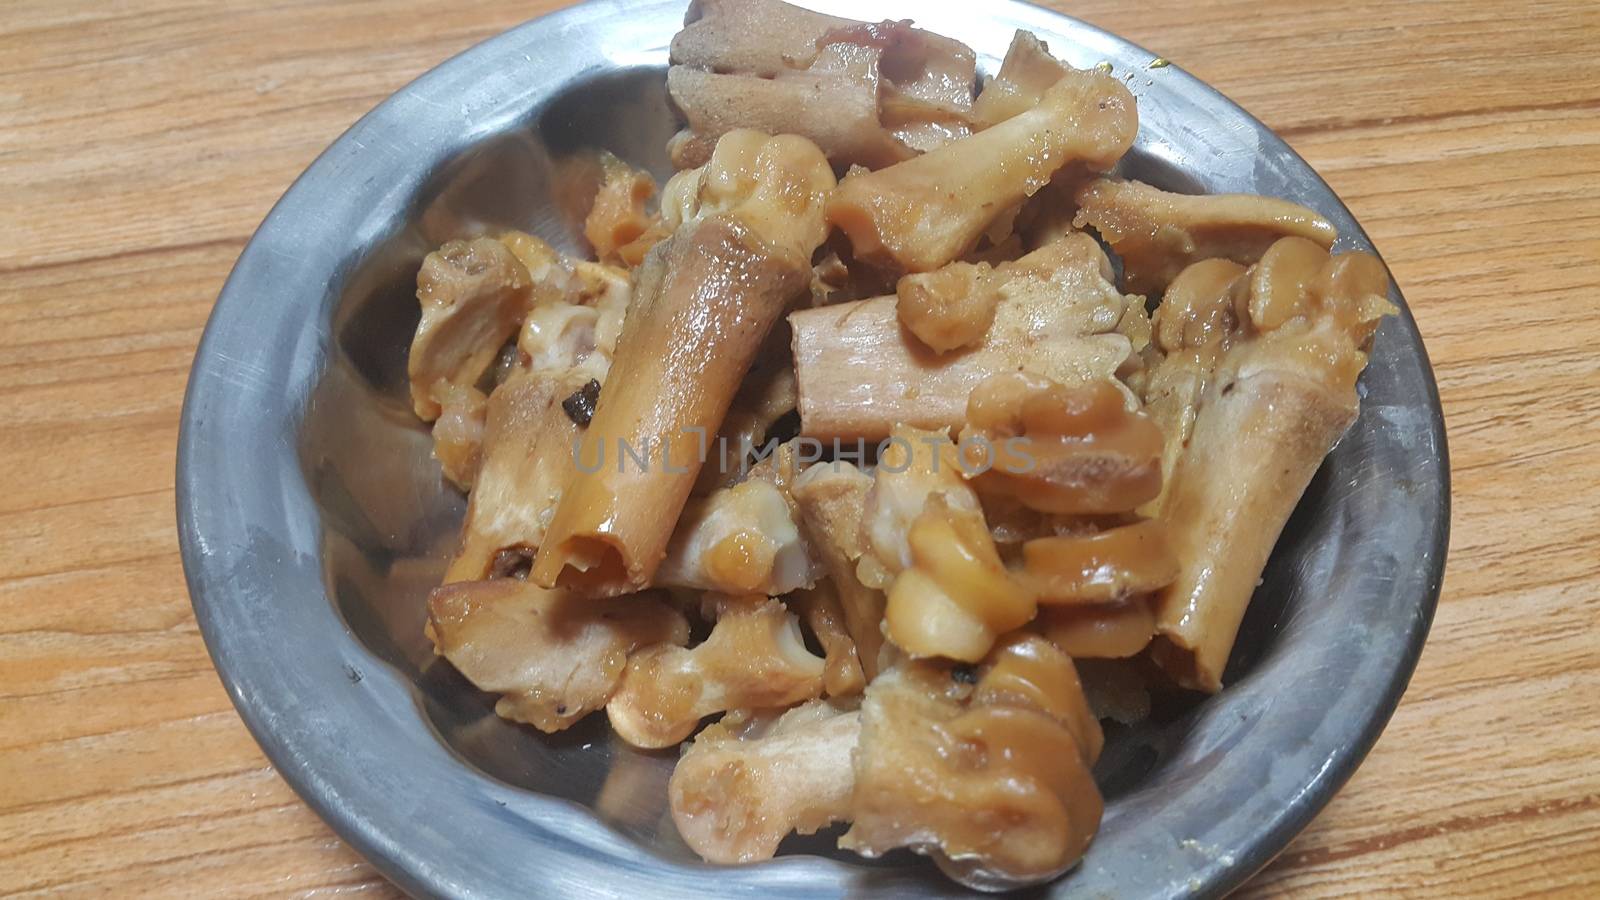 Bones left from siri paaye or paya dish. This dish is popular in Pakistan and Bangladesh